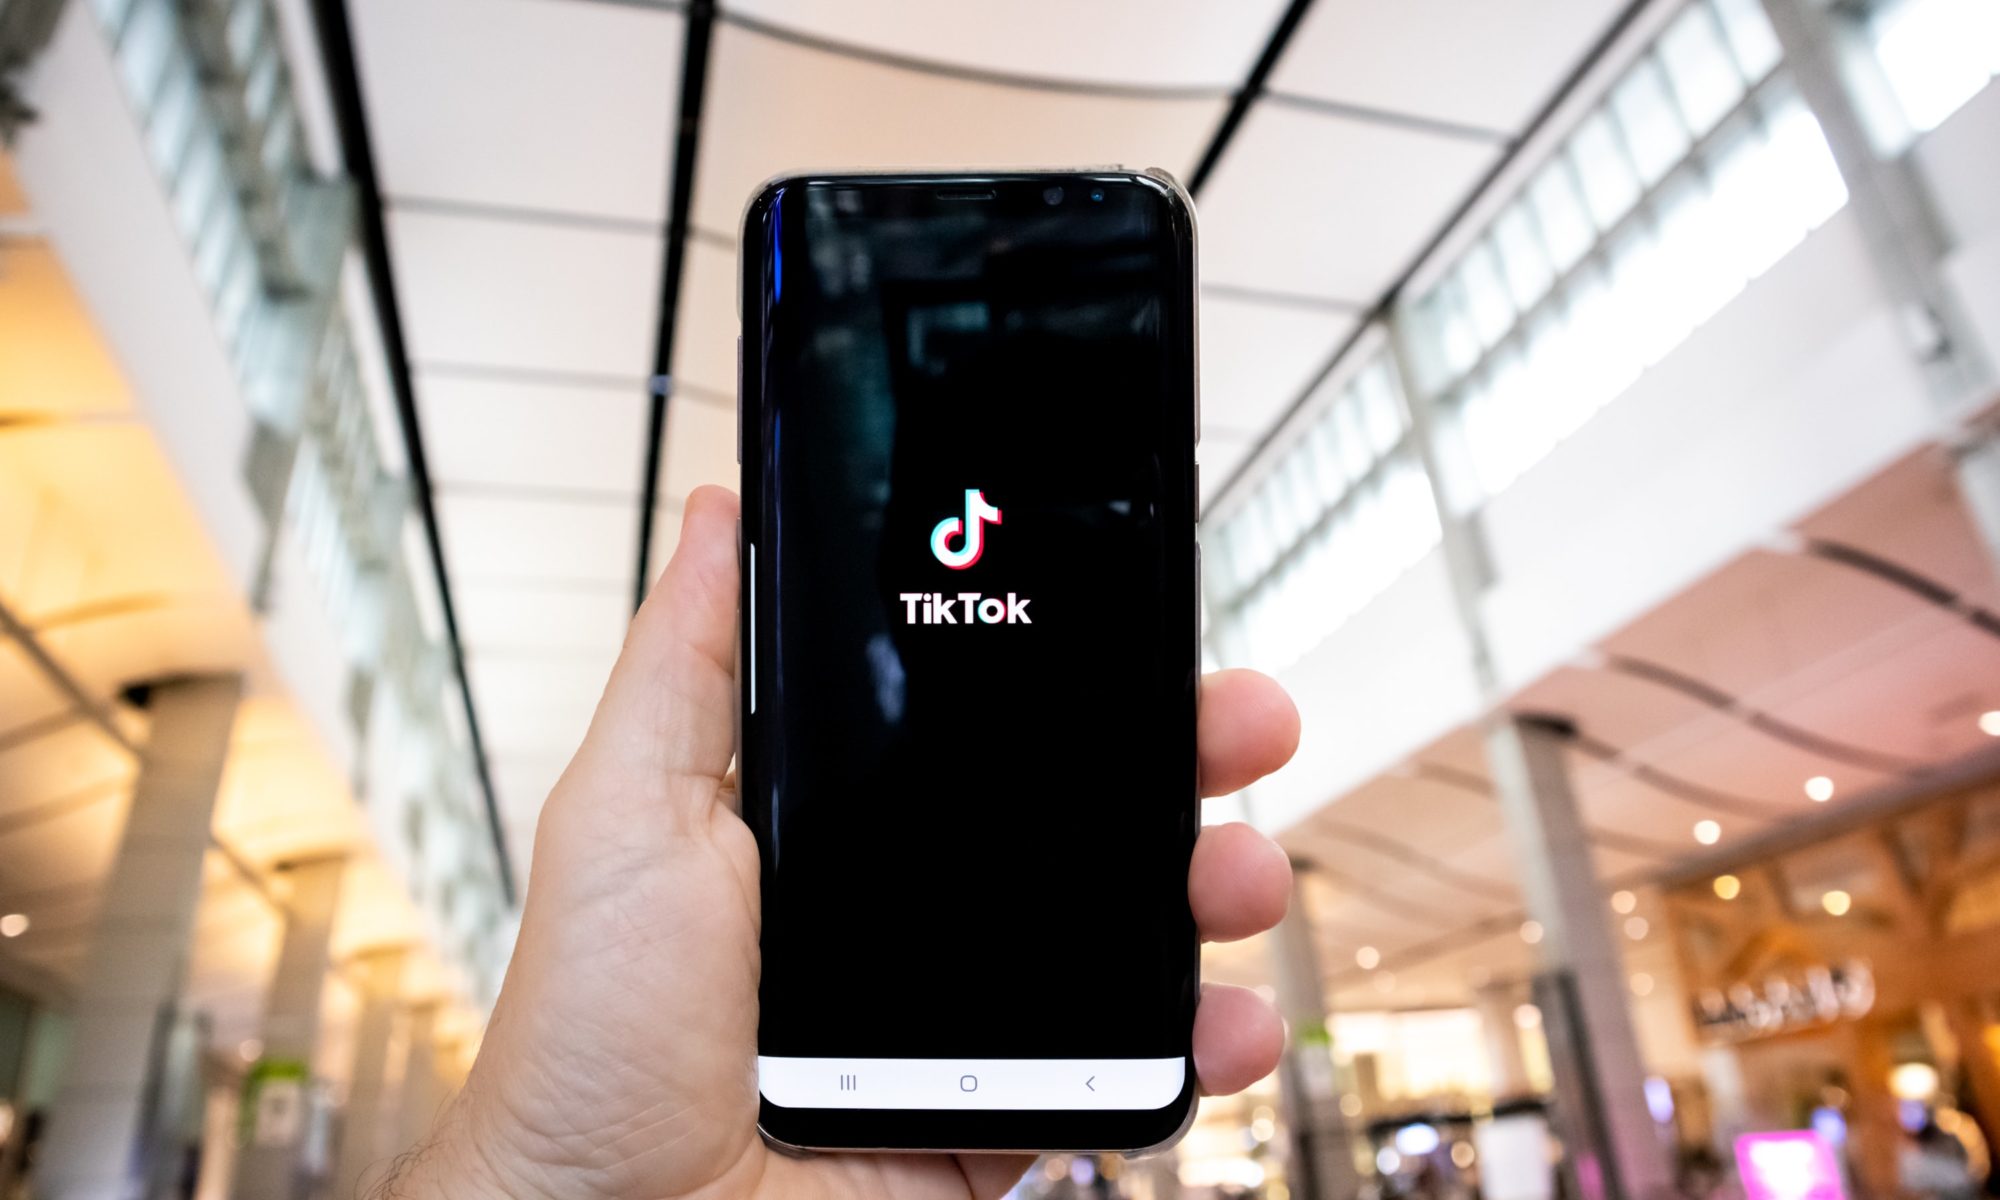 Mock up TikTok App on phone screen